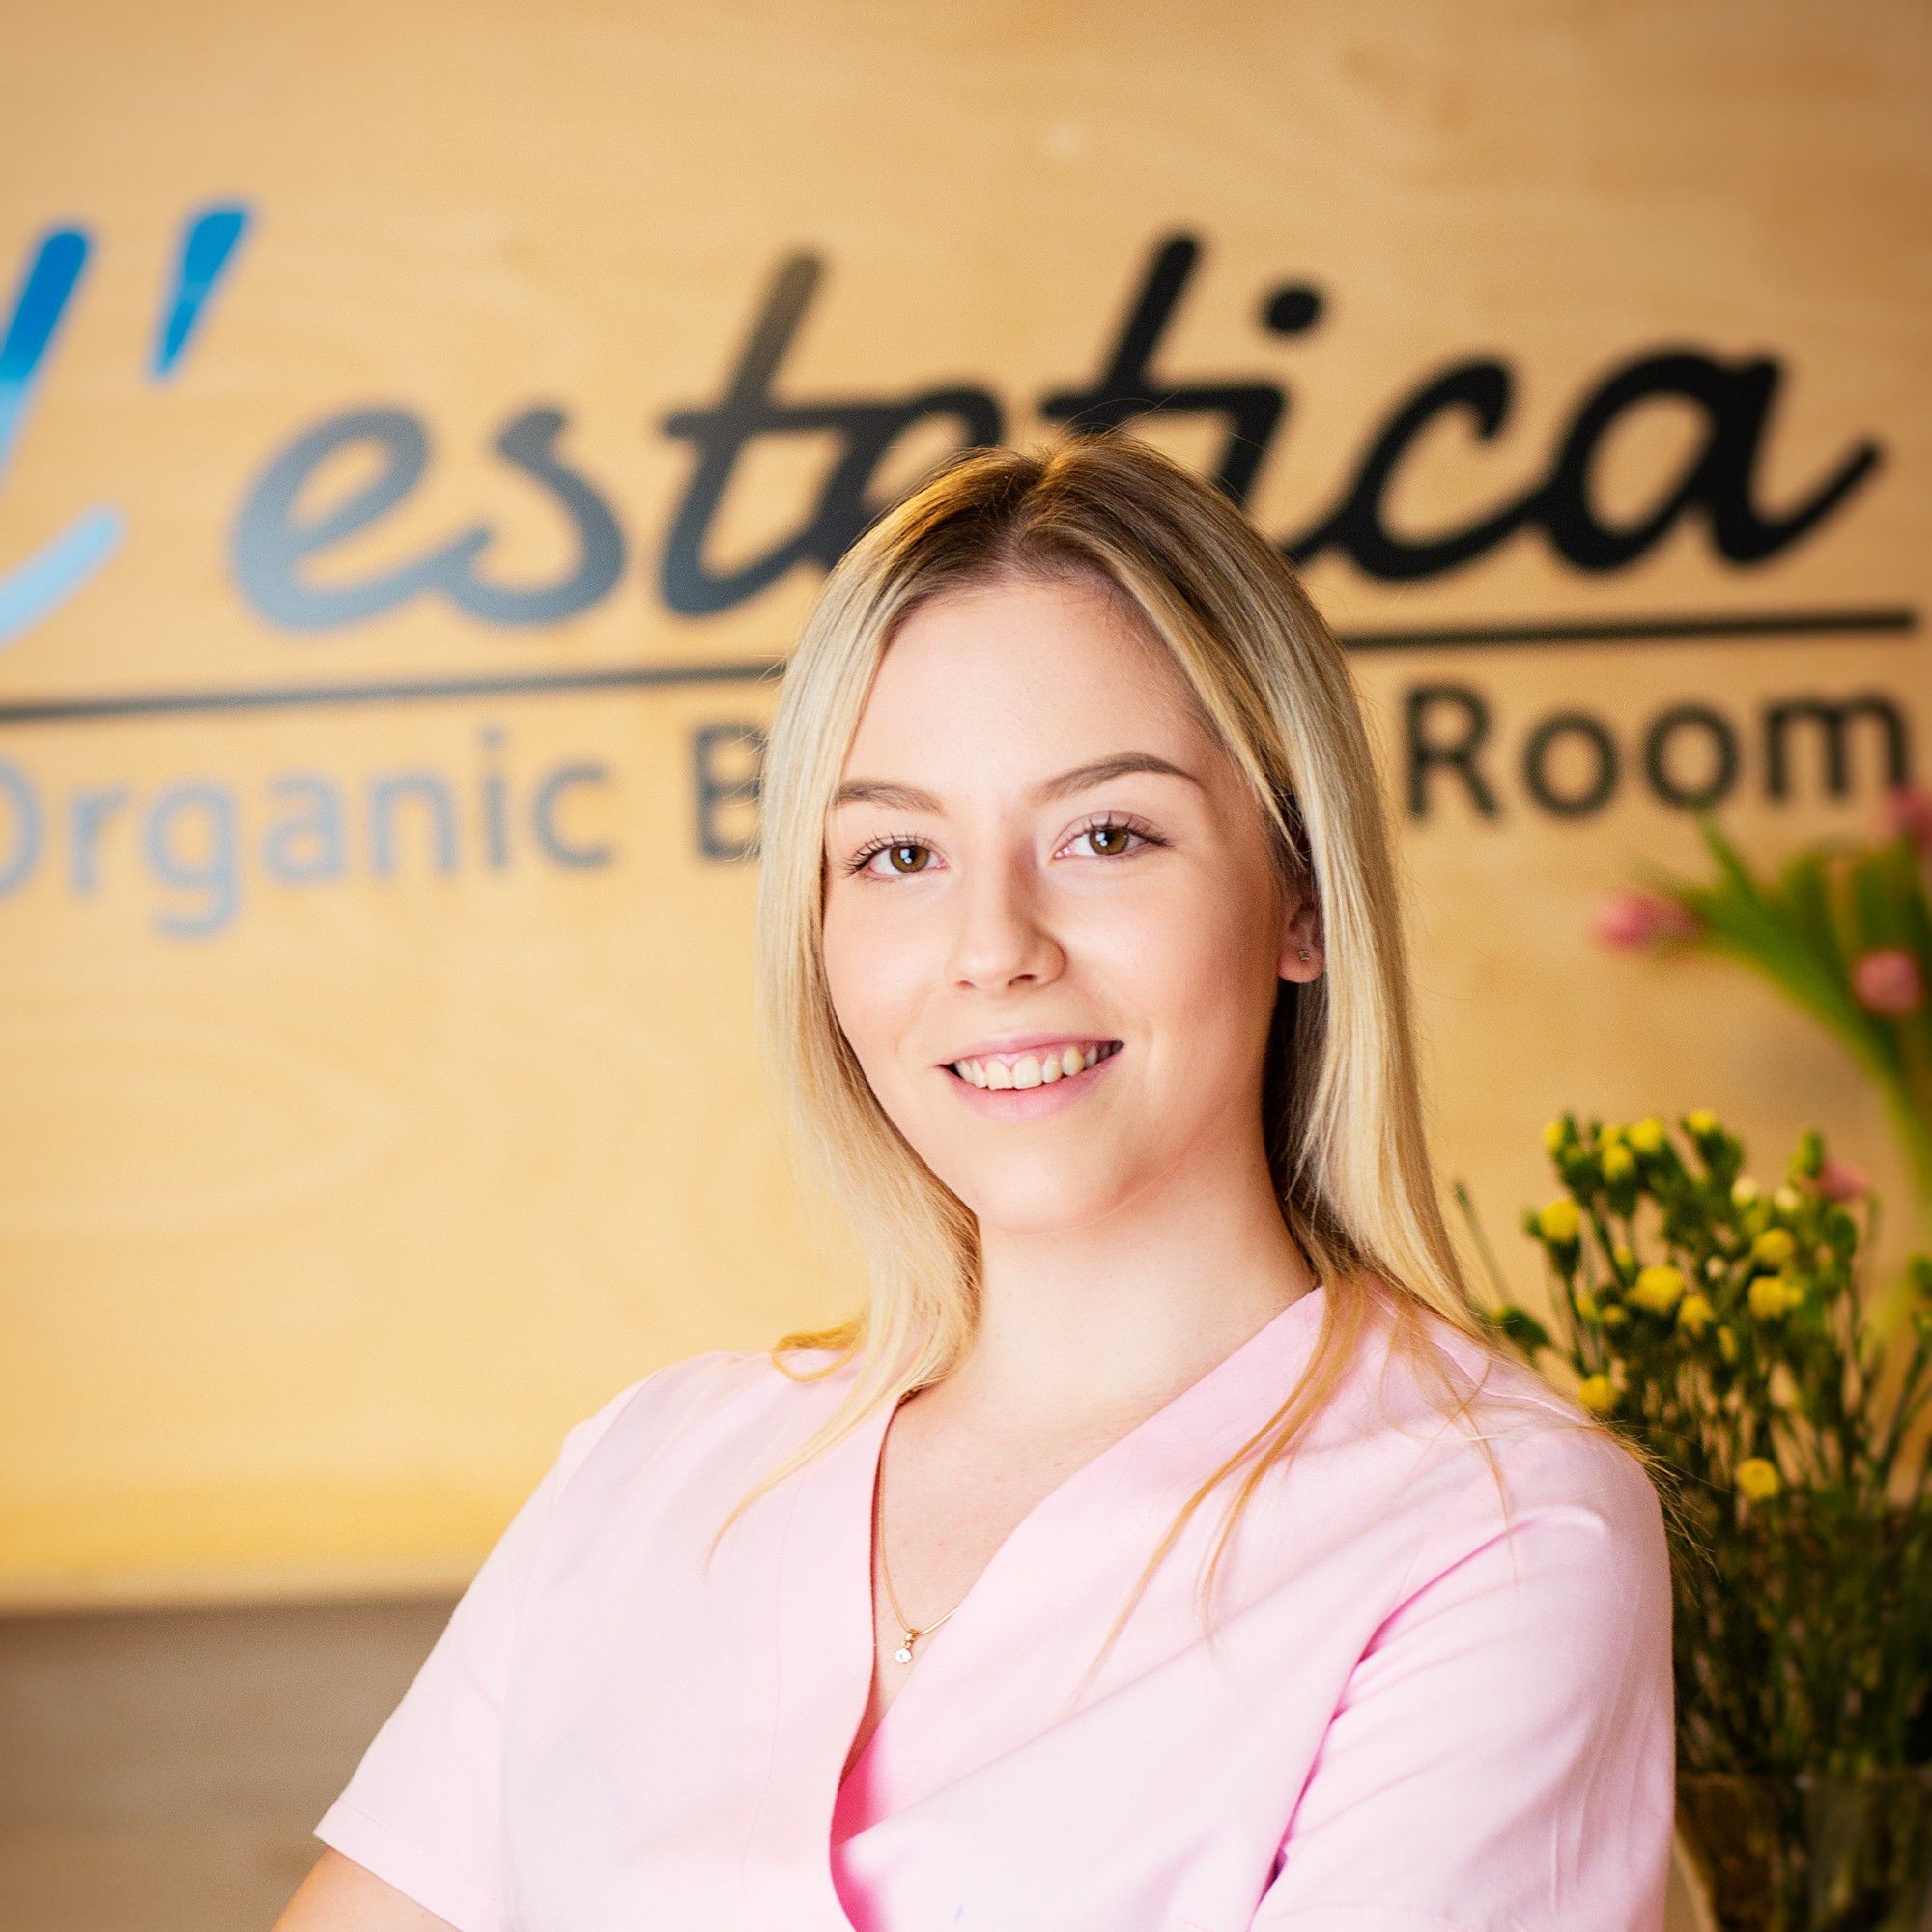 Sonia - L'ESTETICA Organic Beauty Room